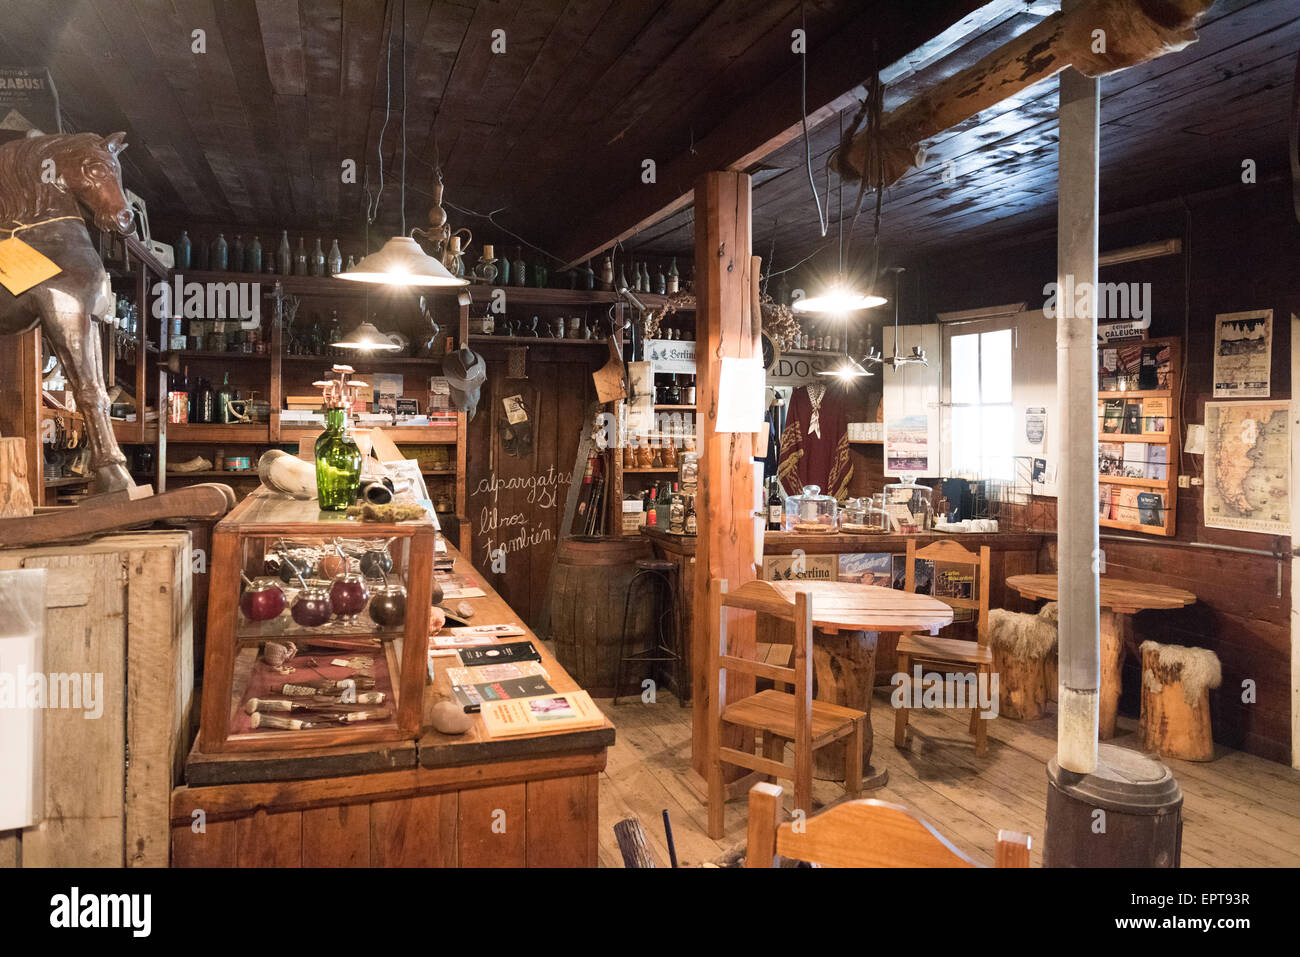 El Viejo Almacen del Foyel - Restaurant and Museum of Mapuche life - on La Ruta 40 near El Bolson, Neuquen Province, Argentina Stock Photo